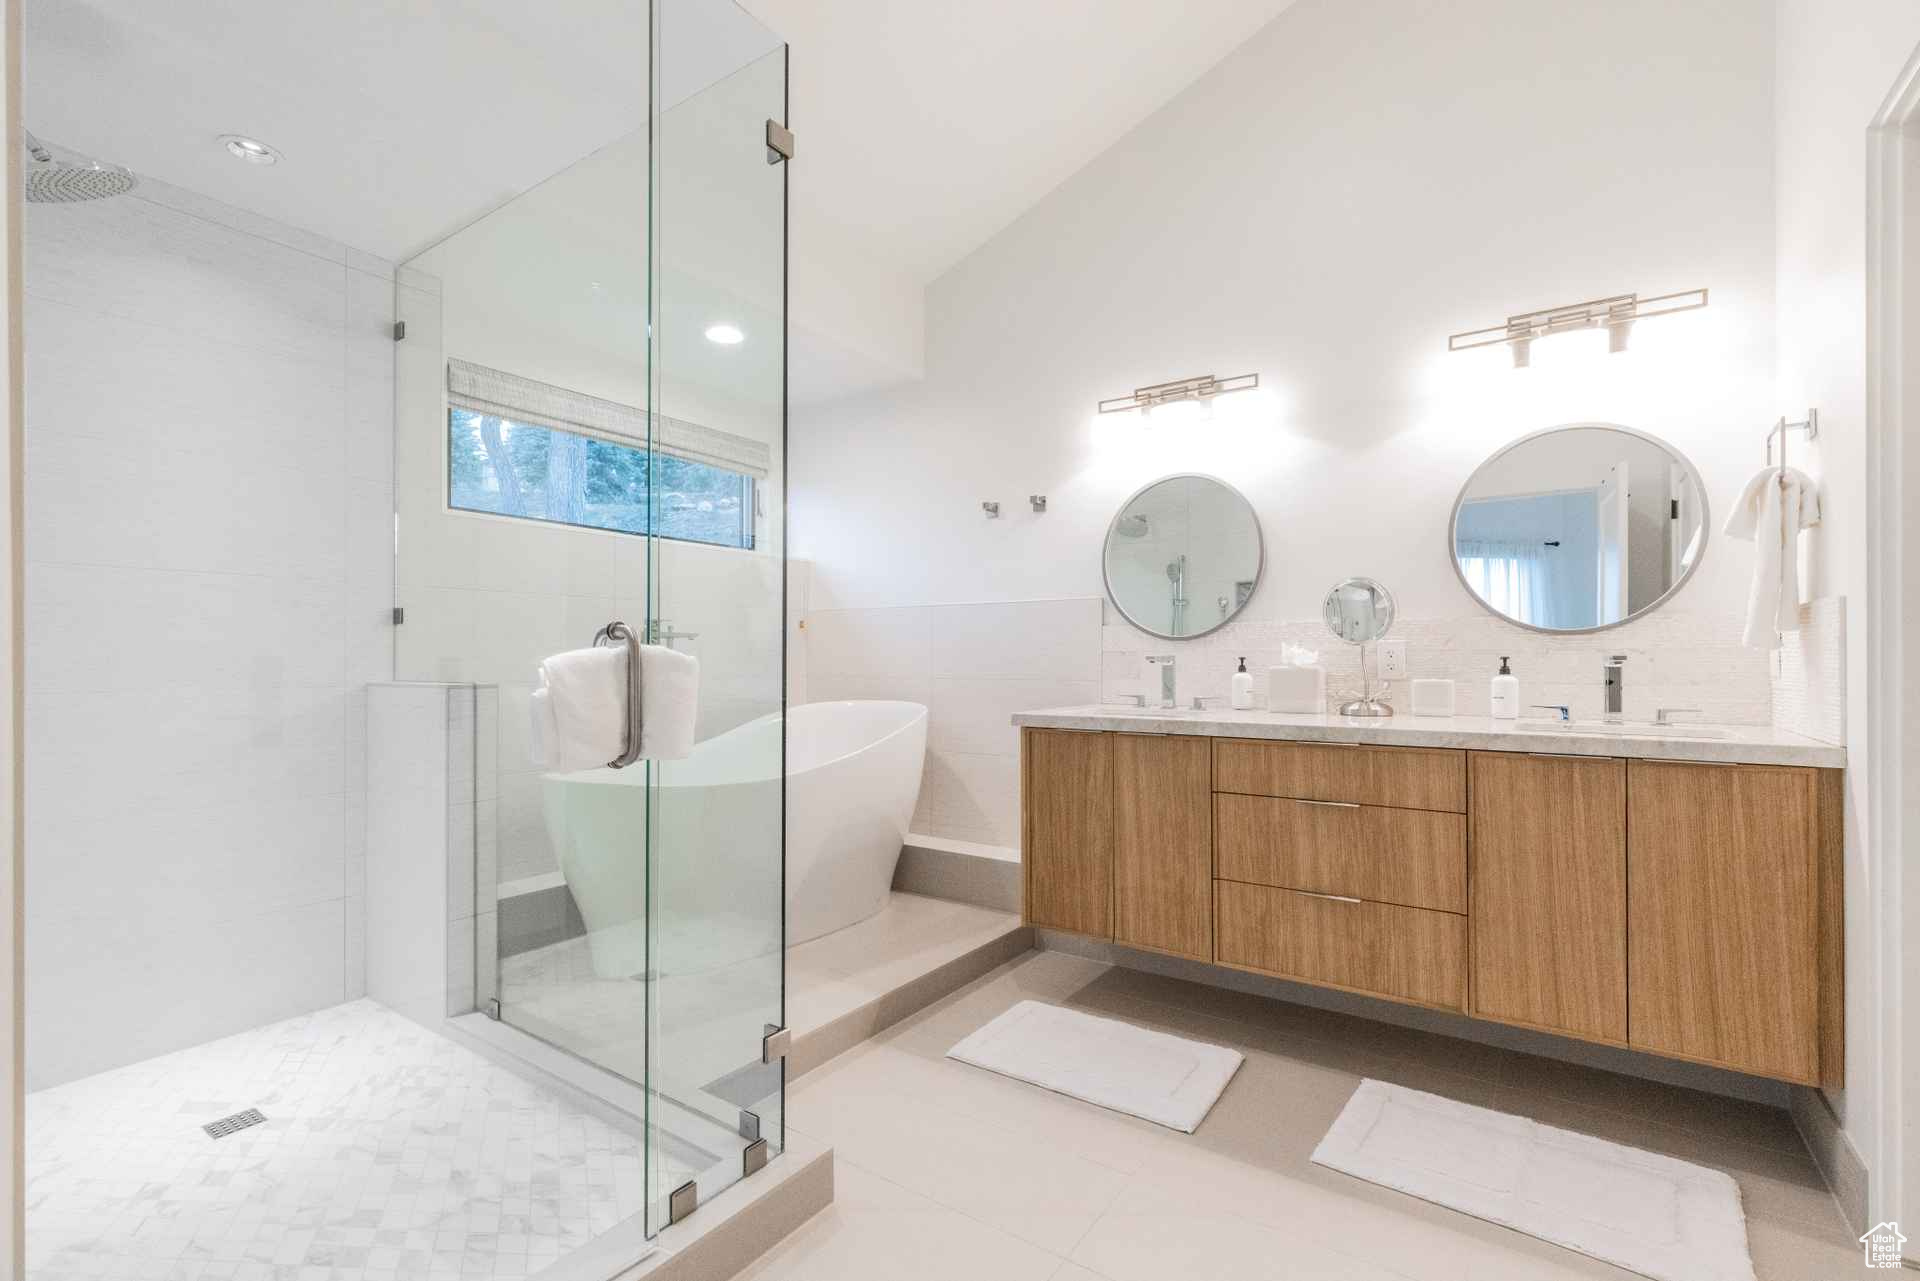 Bathroom with tile floors, tile walls, separate shower and tub, dual vanity, and tasteful backsplash